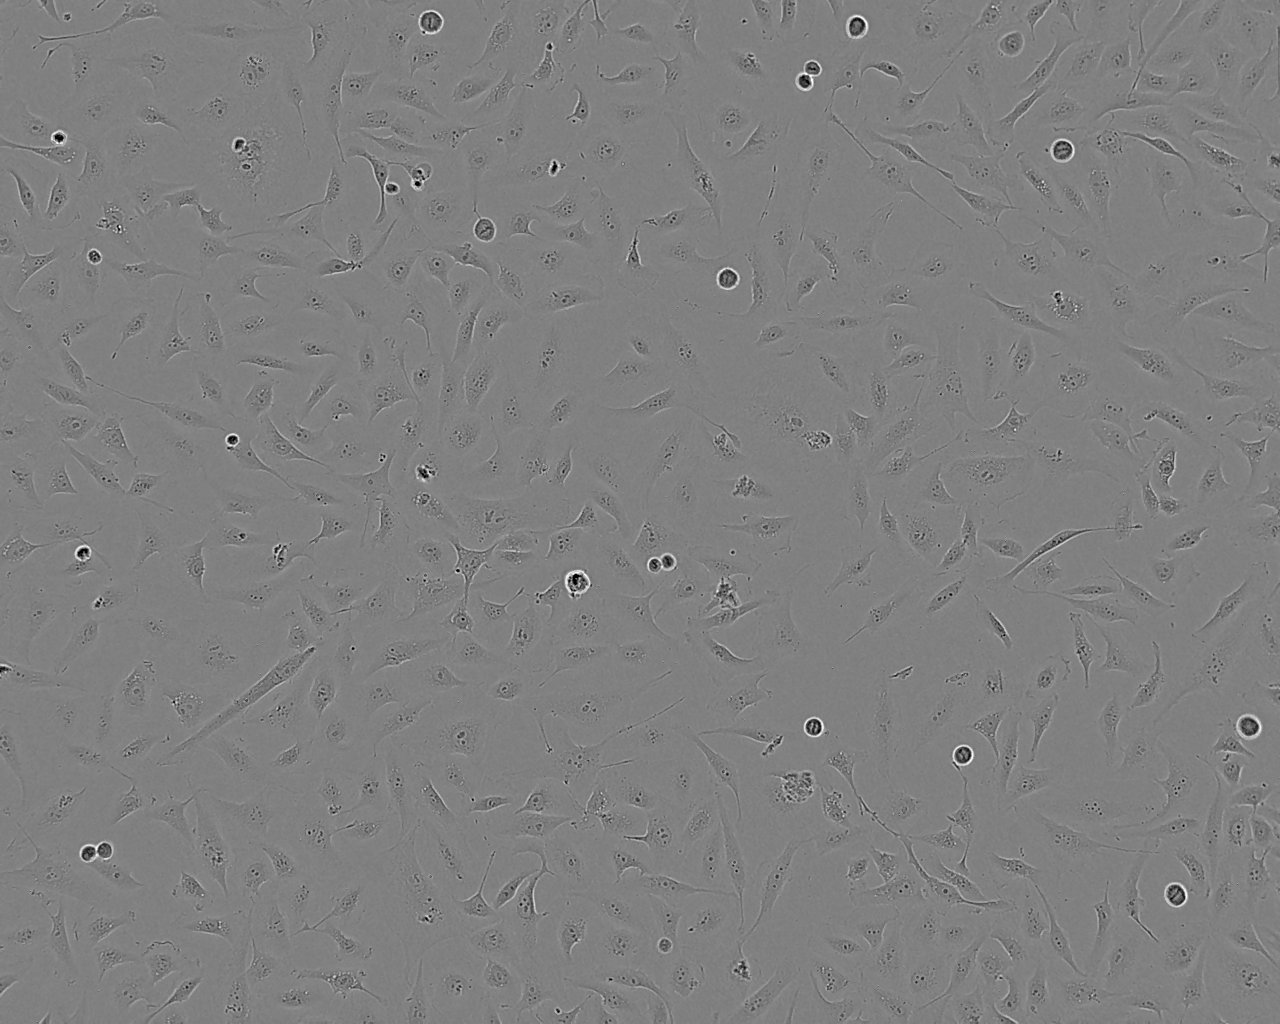 NCI-H2107 epithelioid cells人小细胞肺癌细胞系,NCI-H2107 epithelioid cells